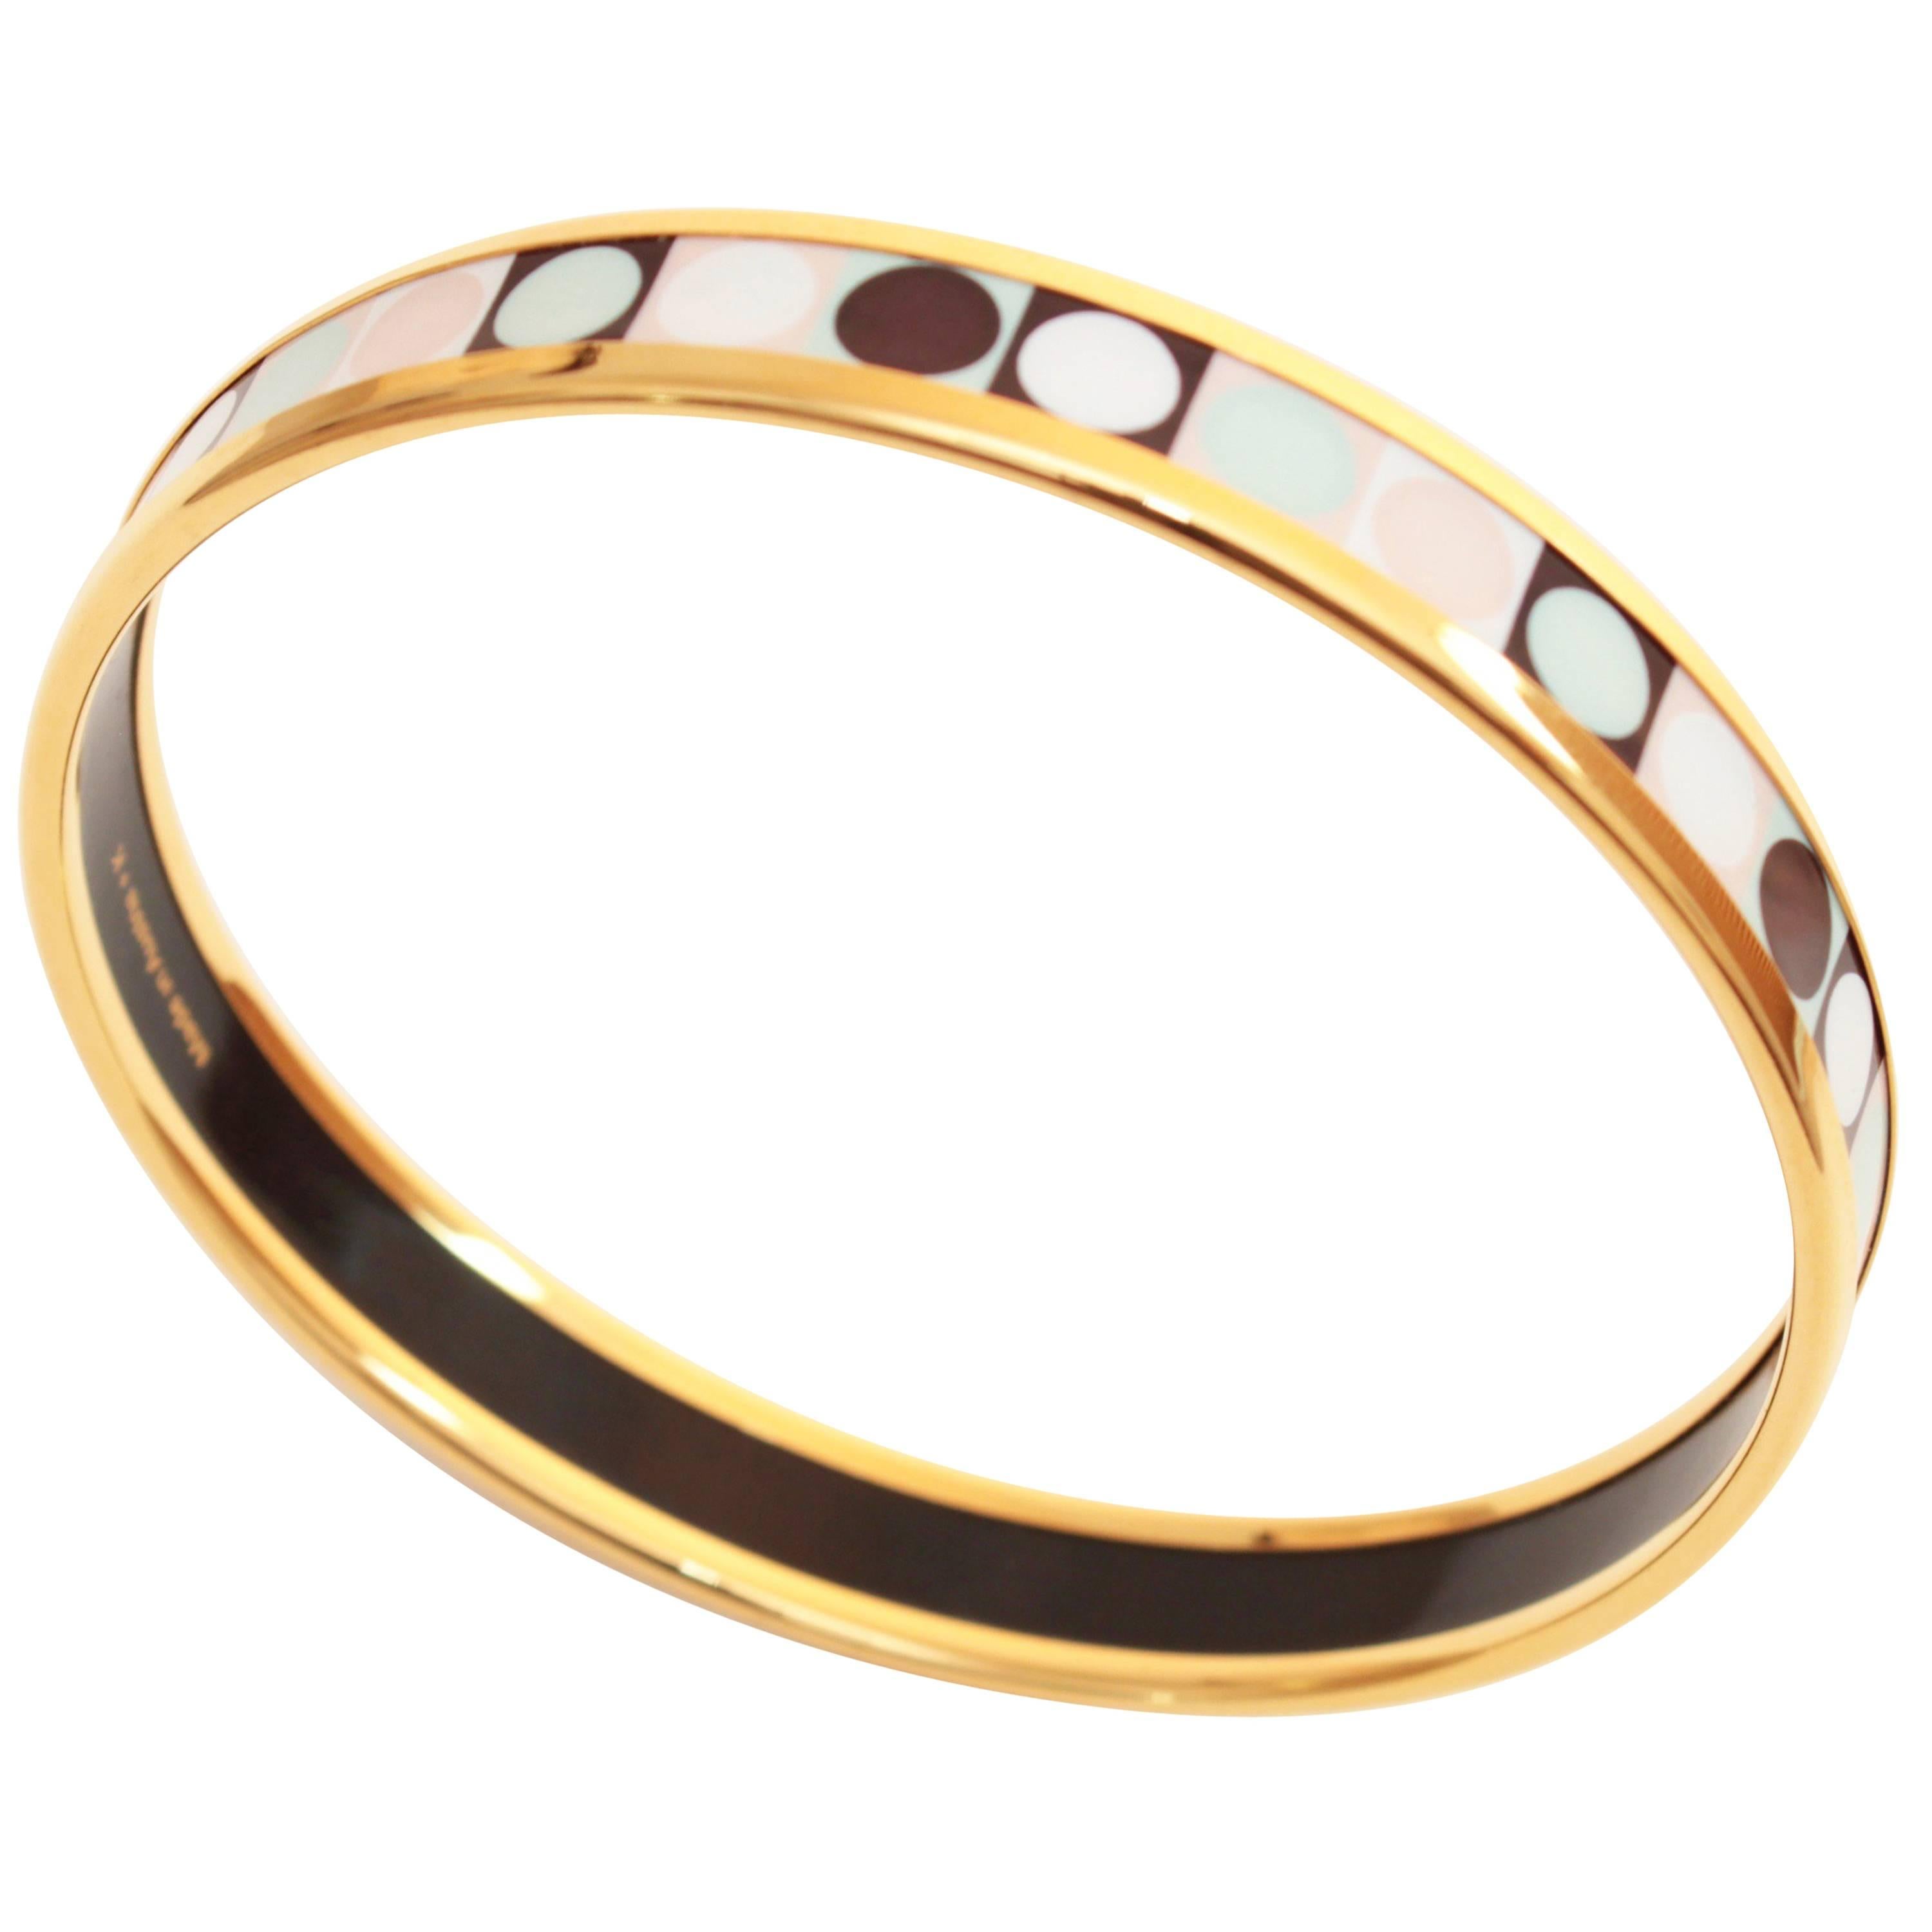 Hermes Narrow Enamel Bracelet Colorful Dots Bangle Gold Plated Size 62 + Box 